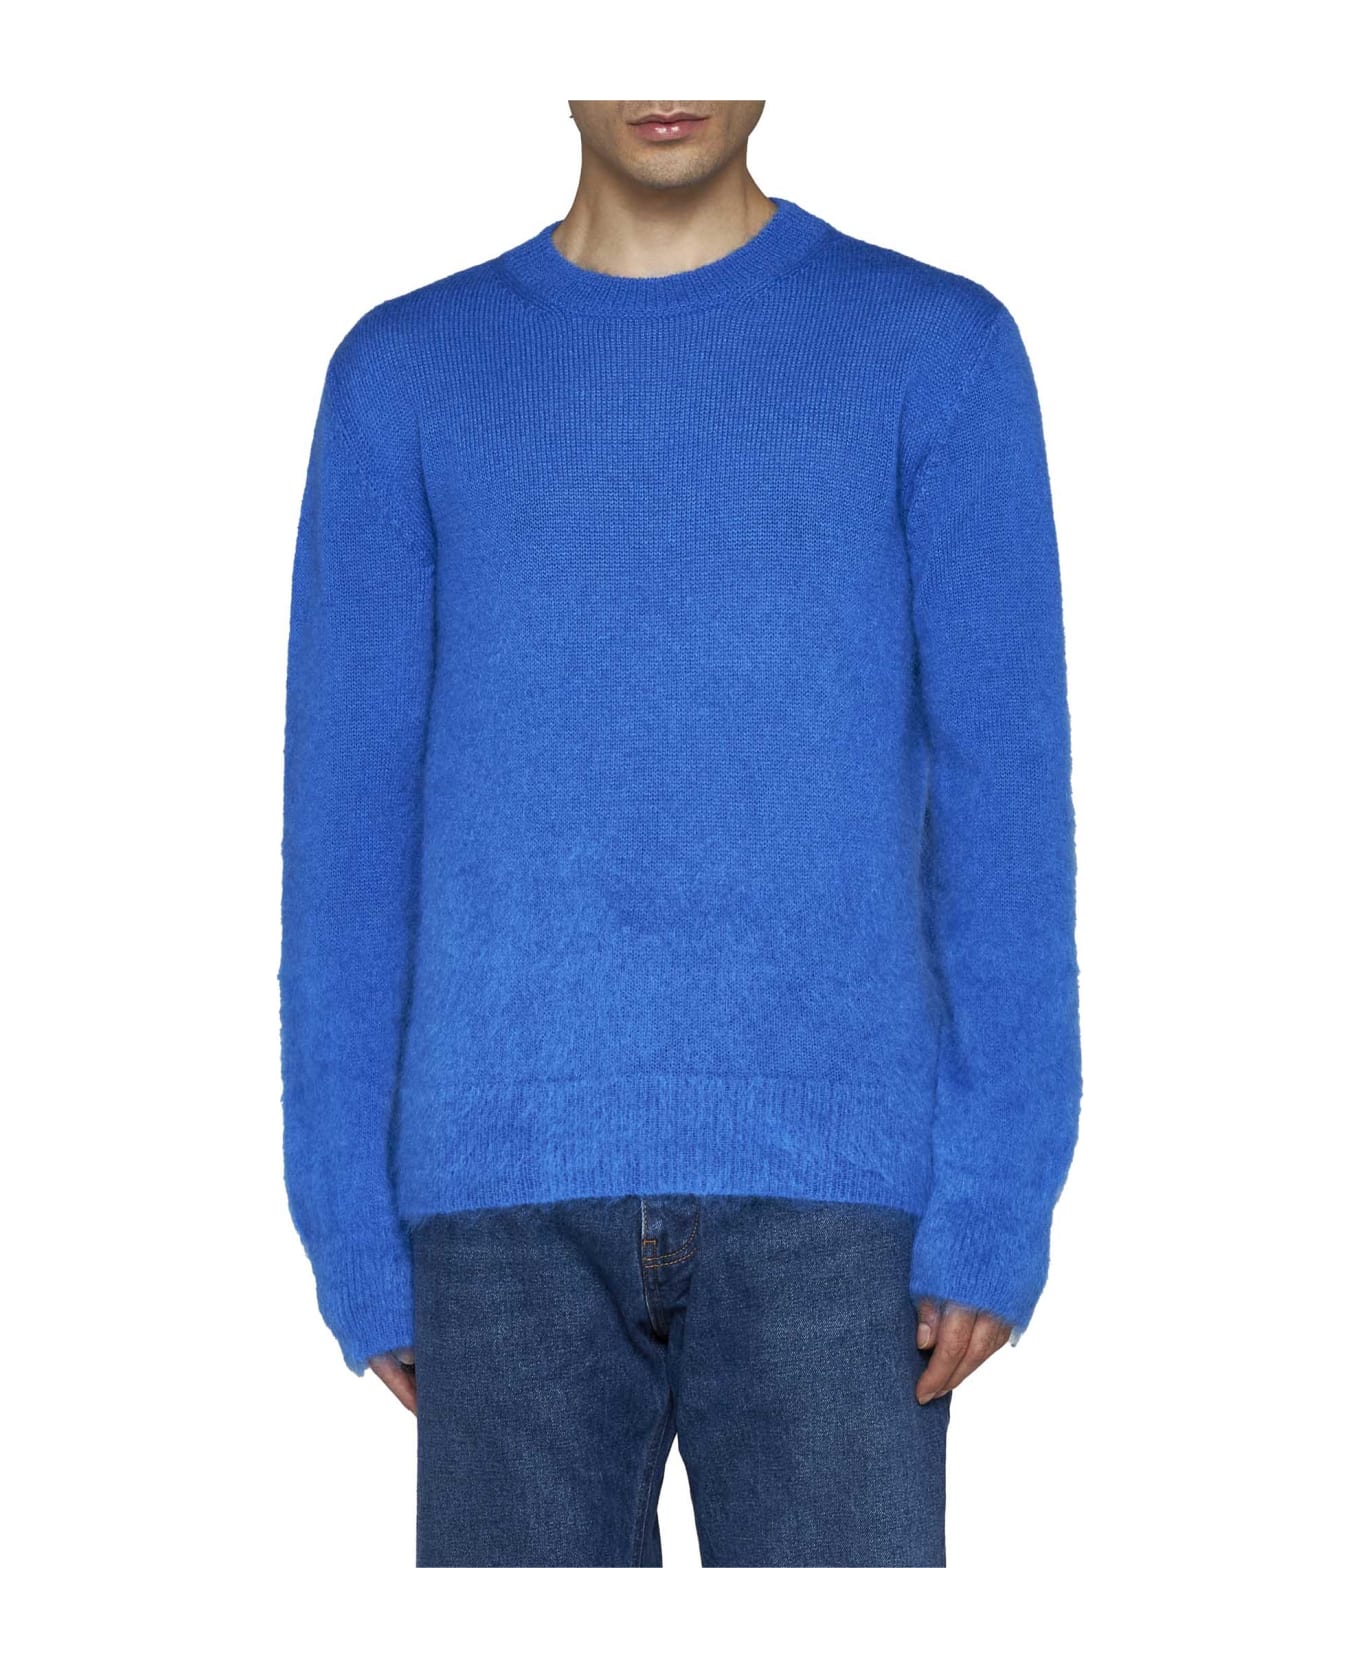 Off-White Mohair Knit Sweater - Dark blue